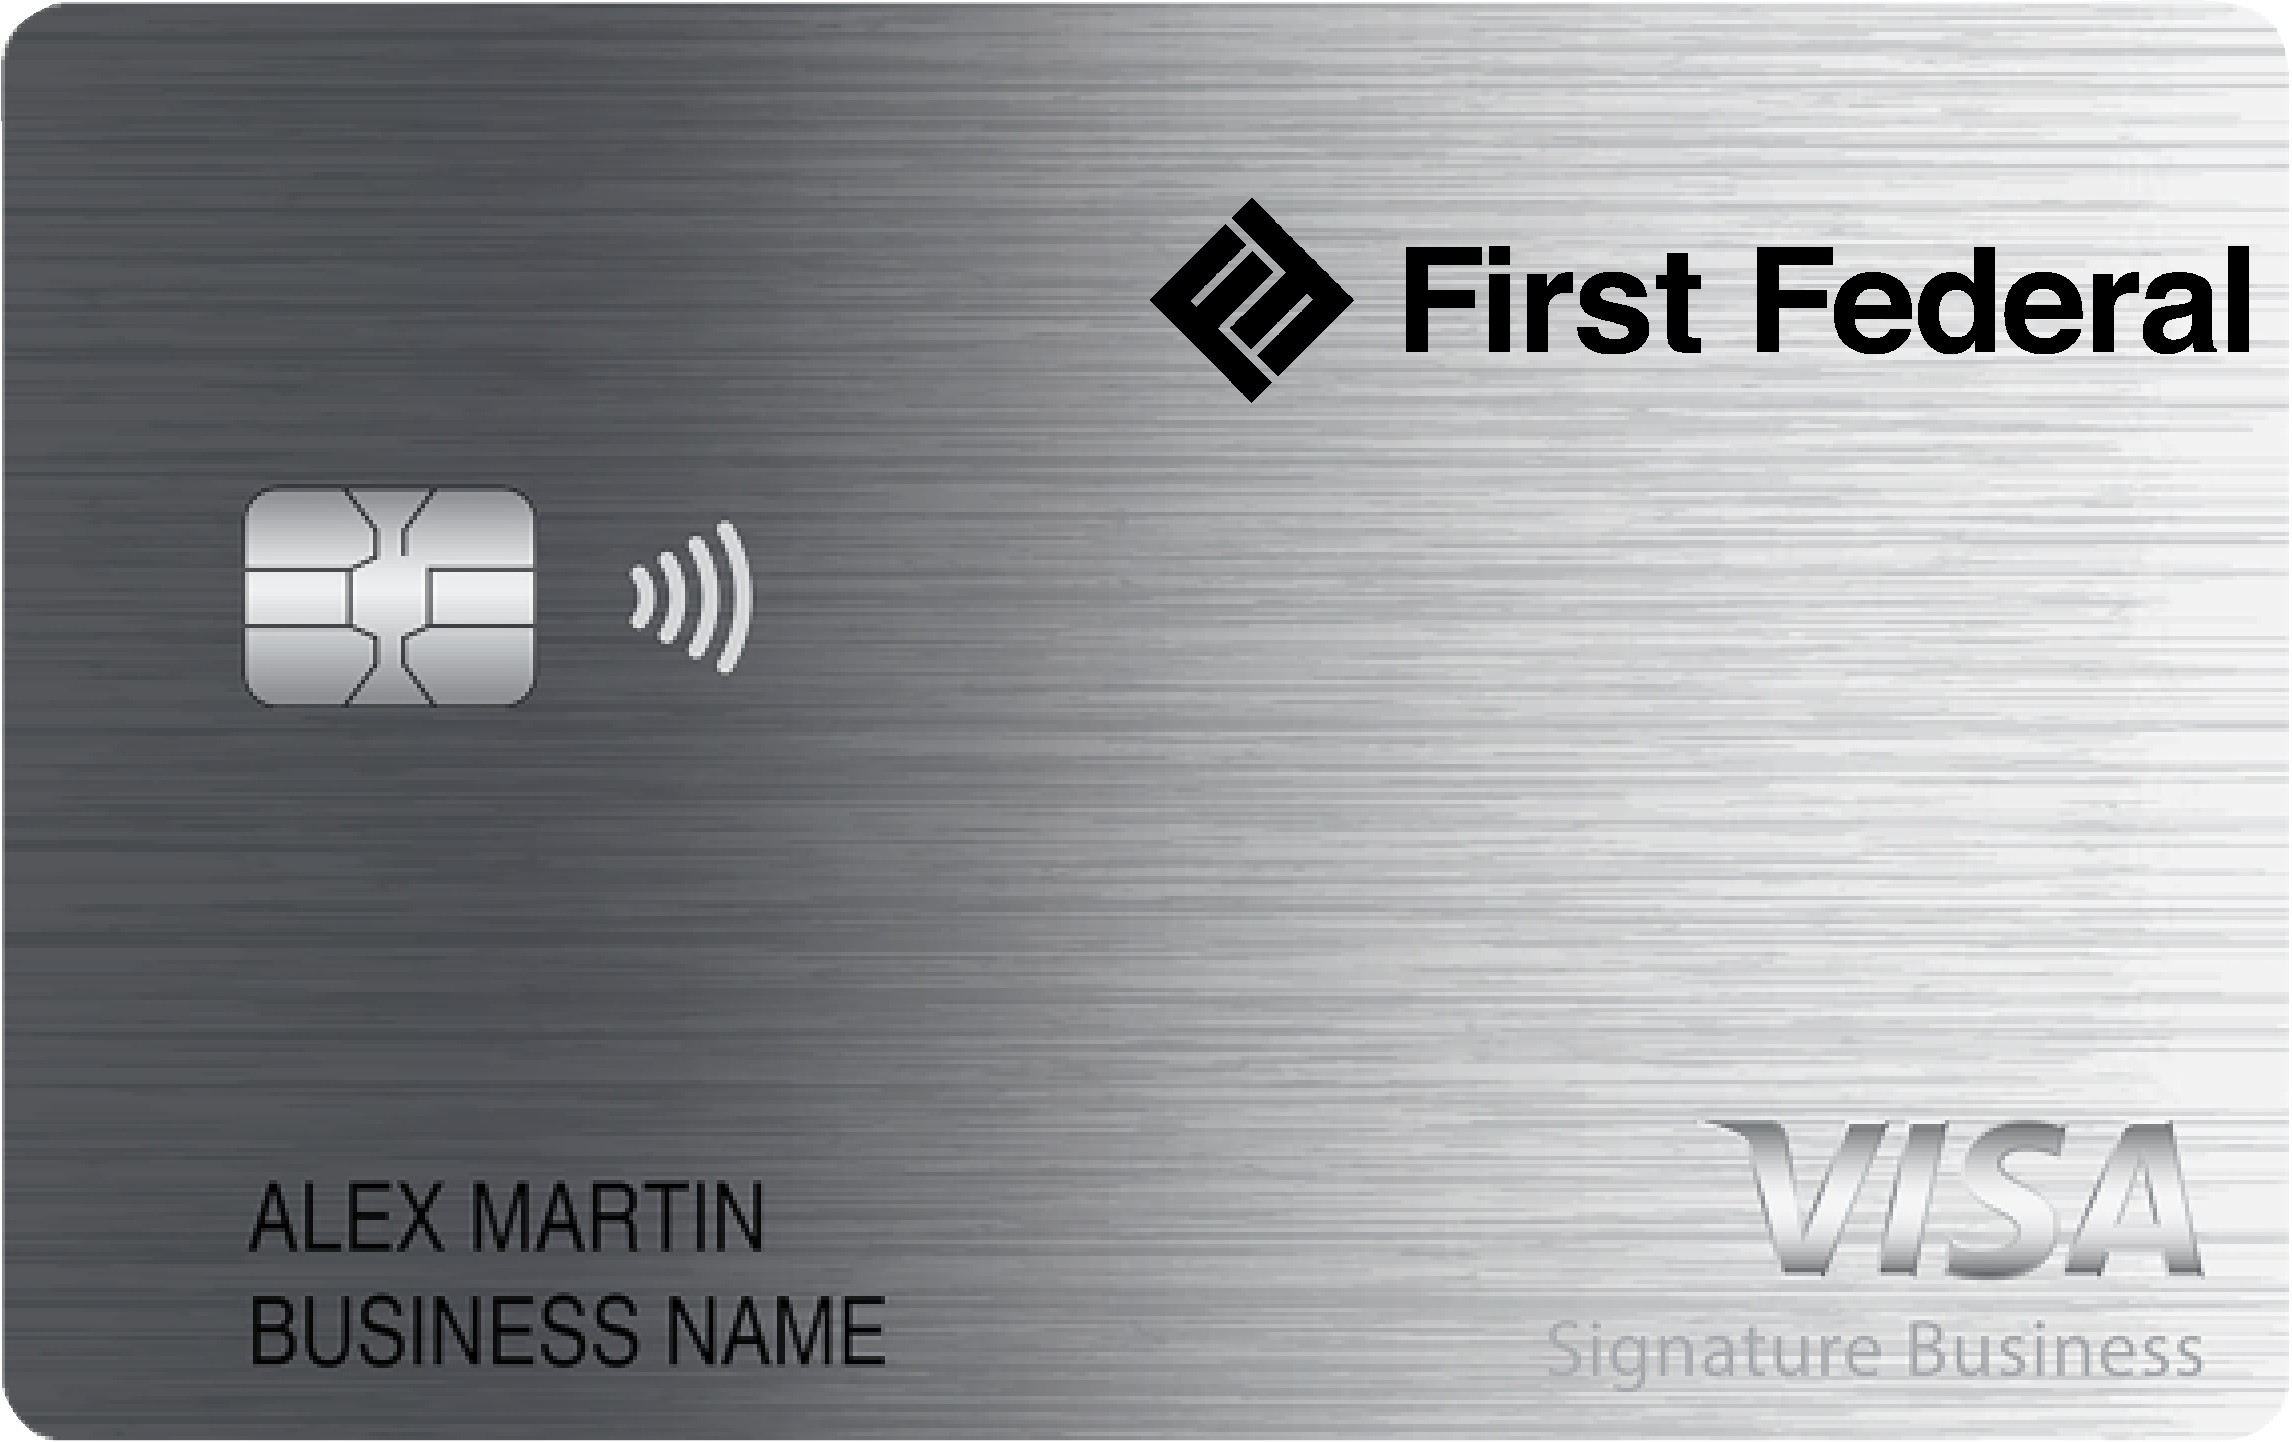 First Federal Smart Business Rewards Card